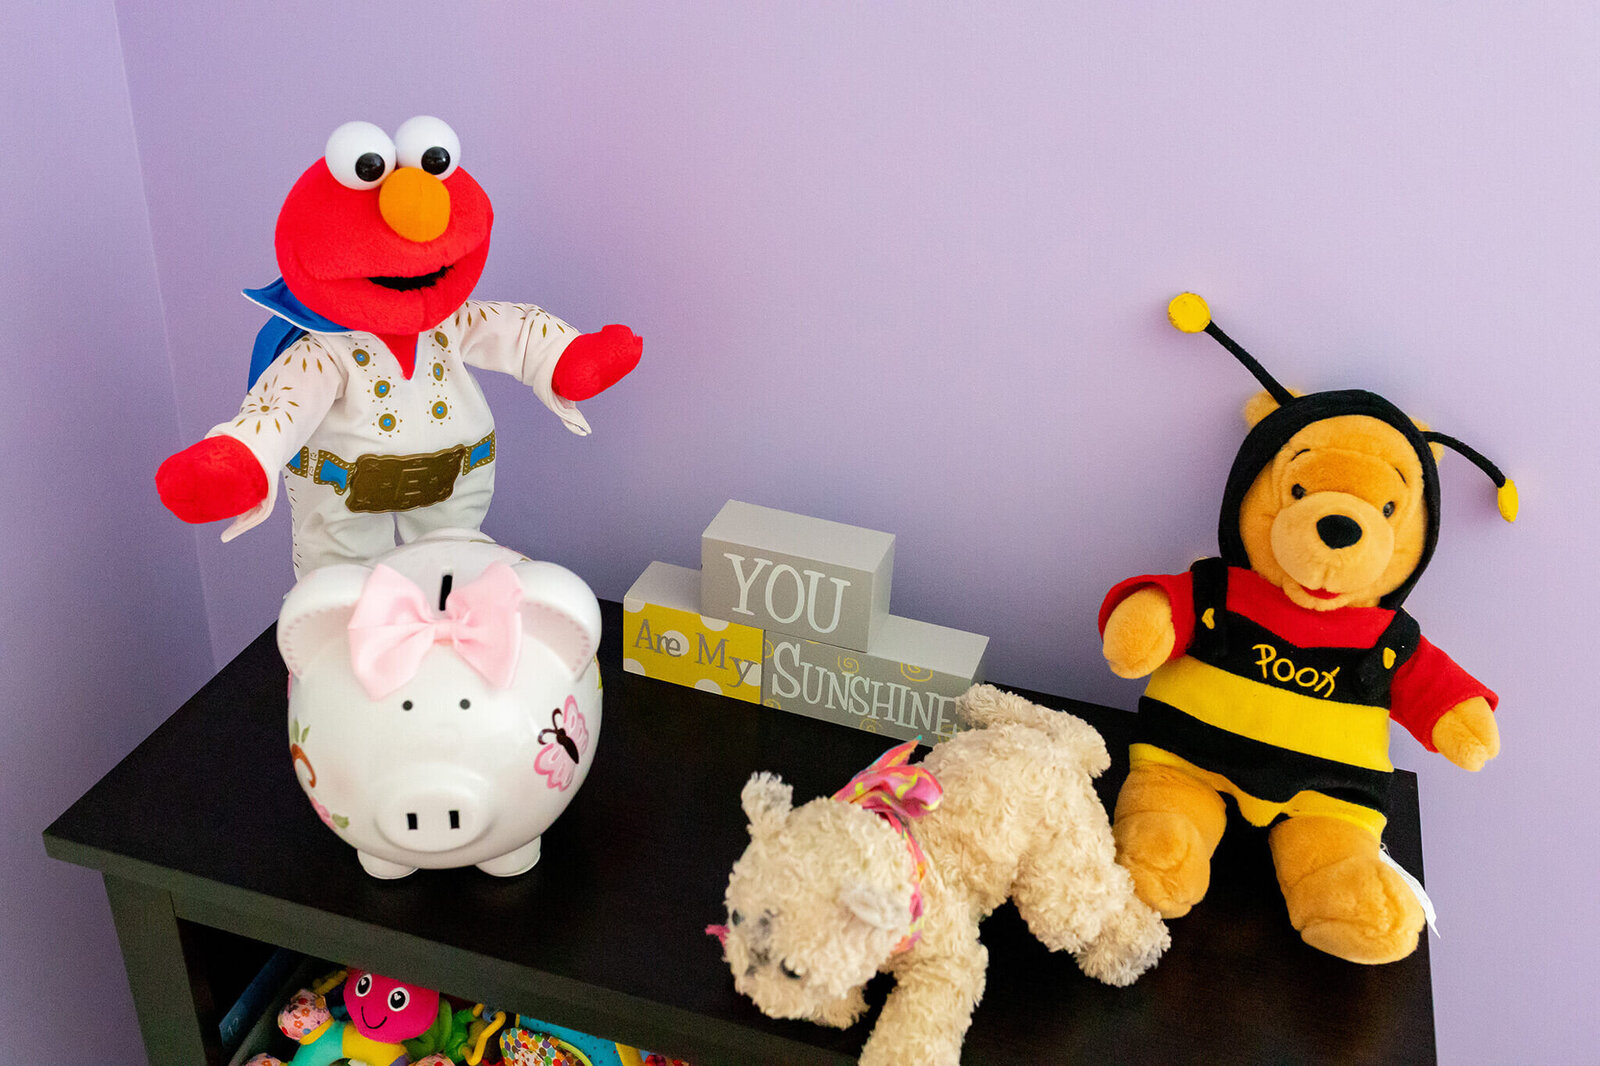 A bookshelf with stuffed animals on it in a Manassas newborn nursery.